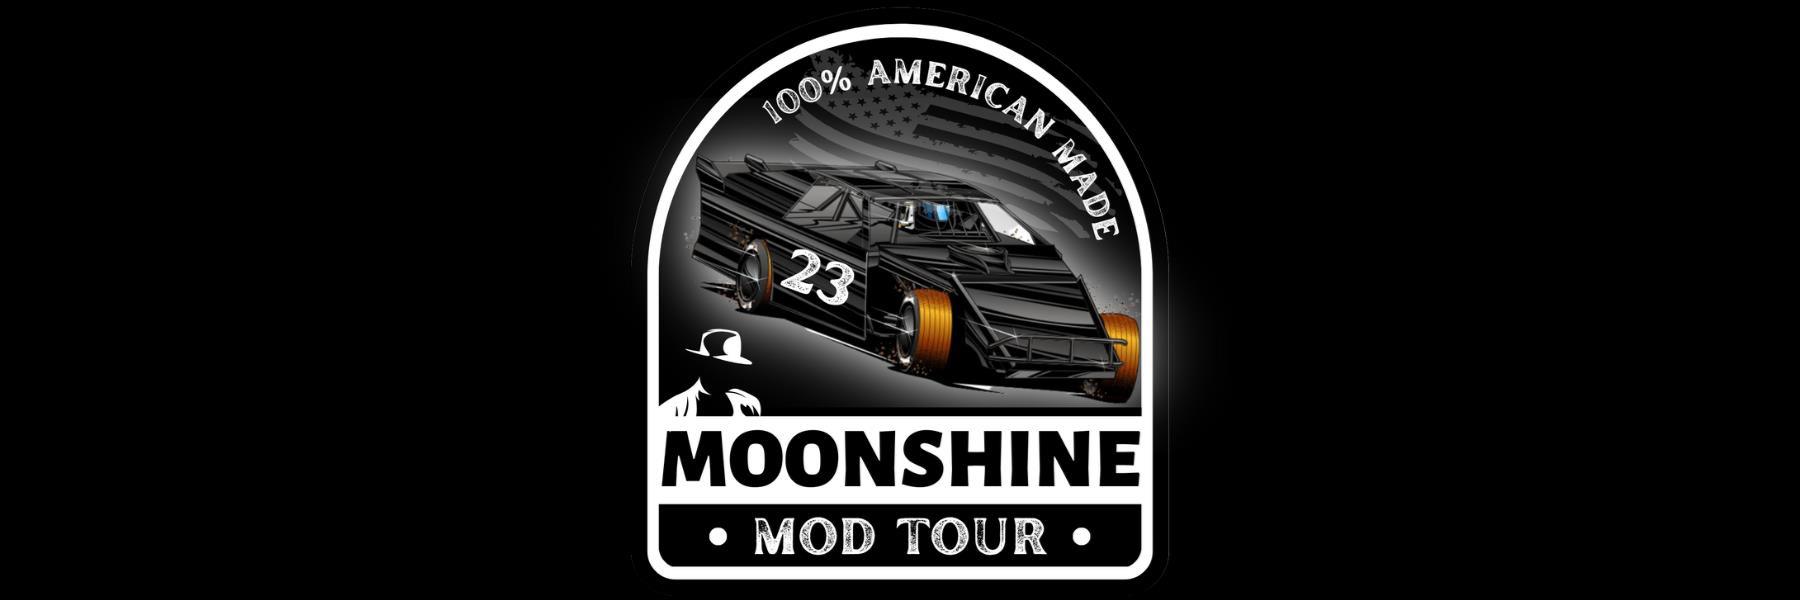 Moonshine Mod Tour